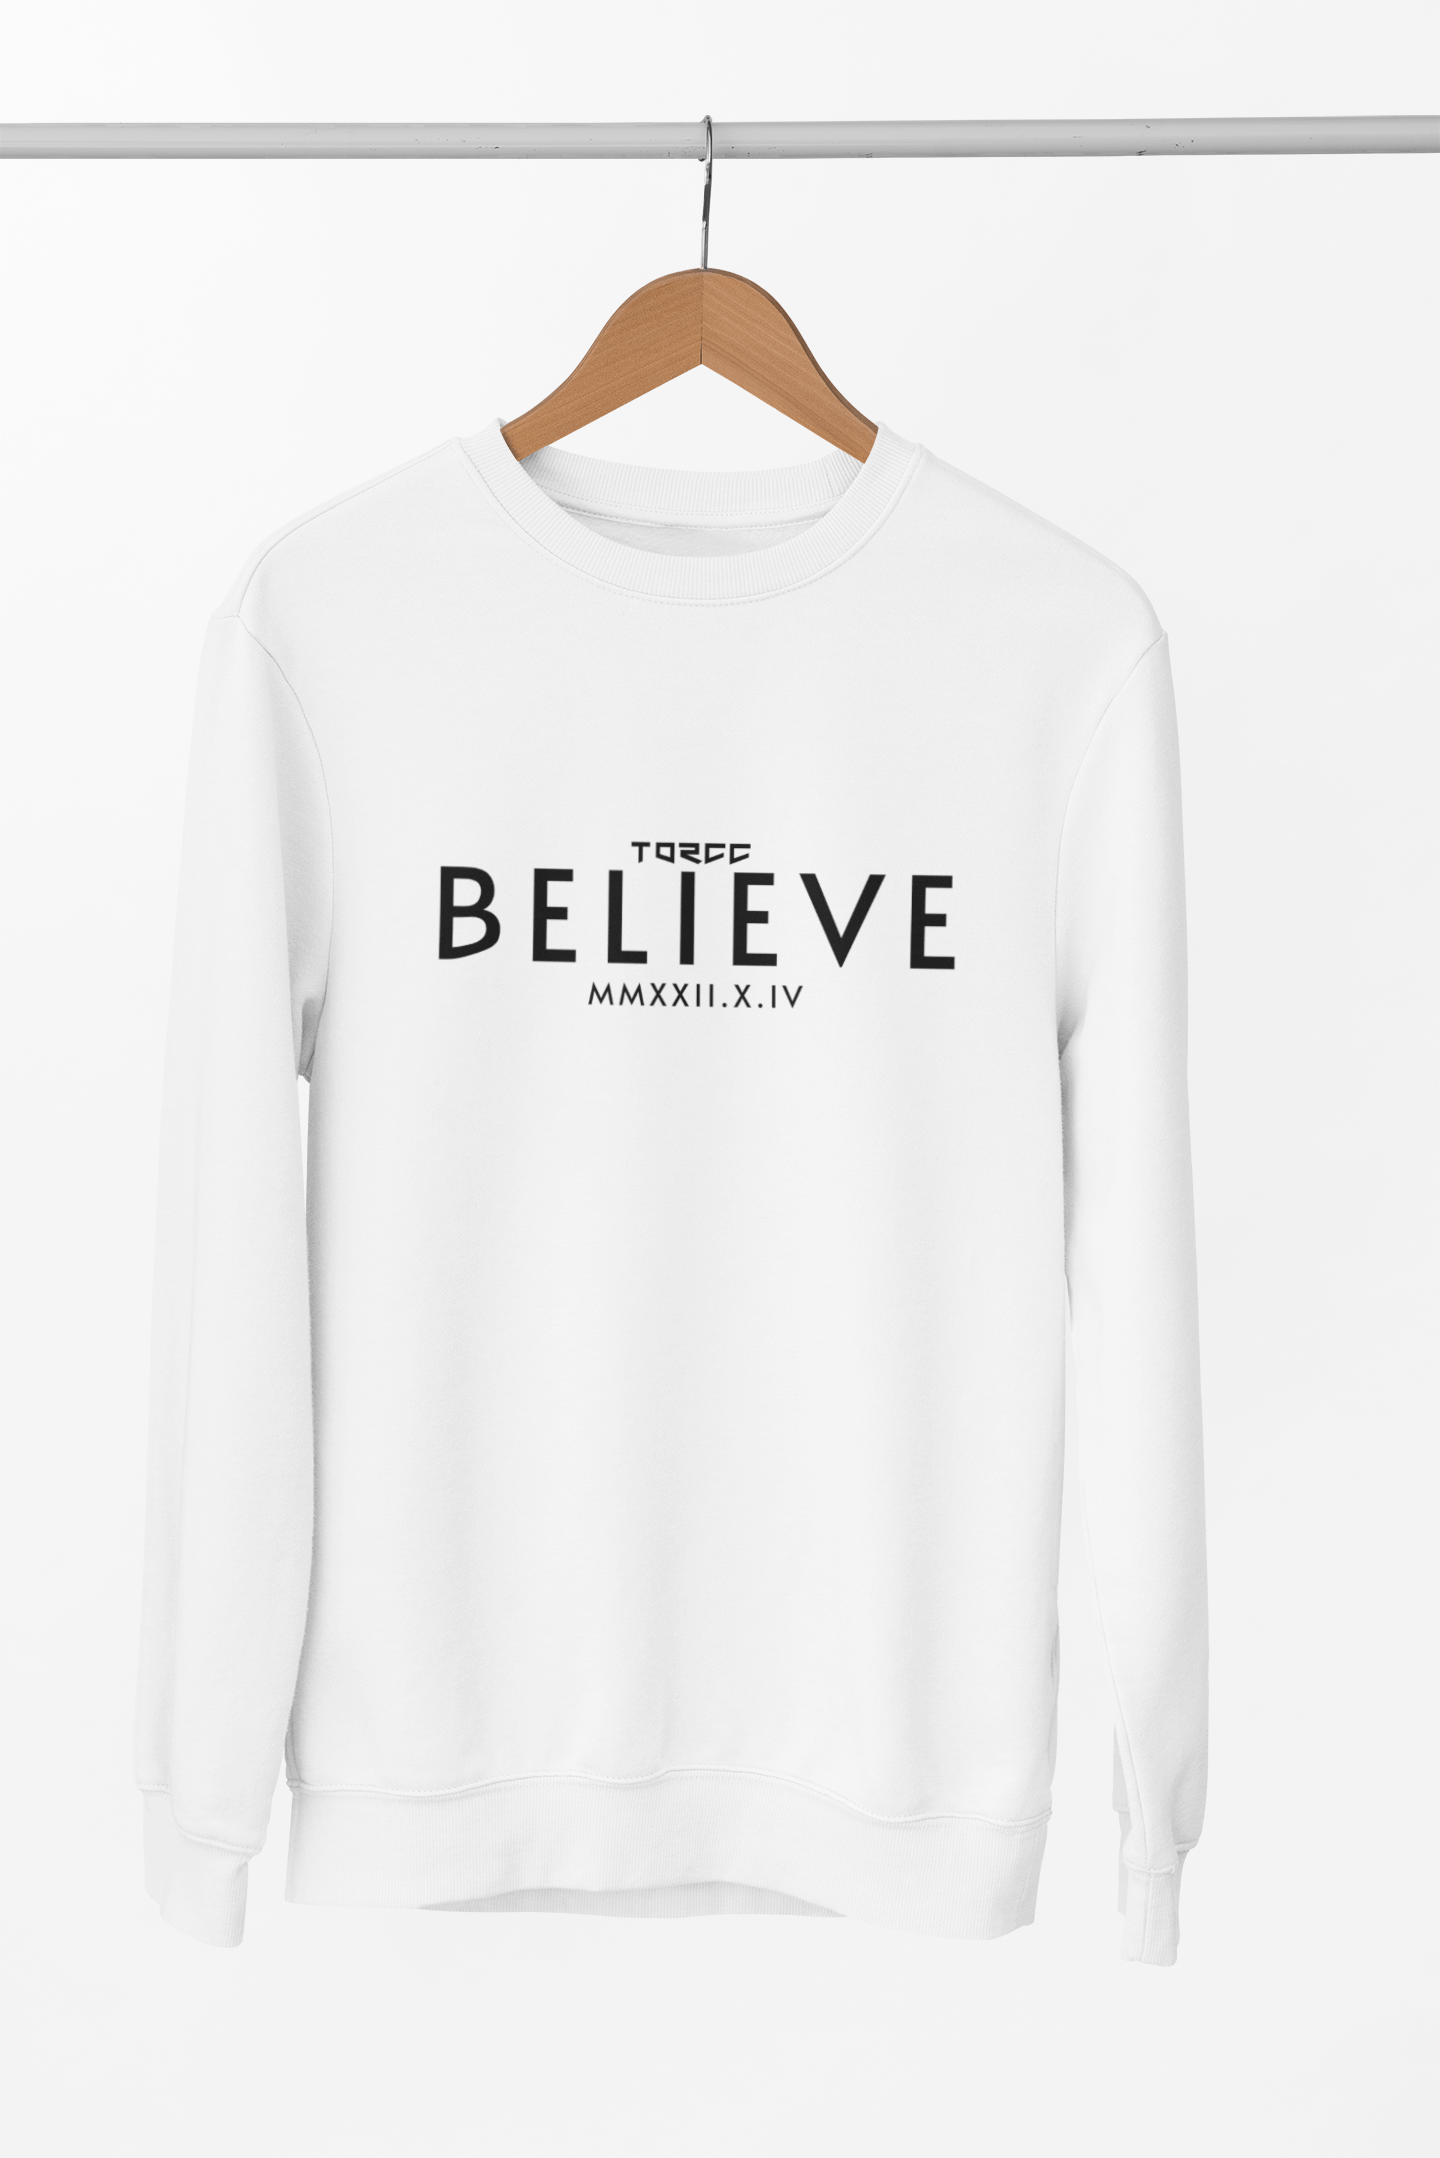 believe sweatshirt for men white